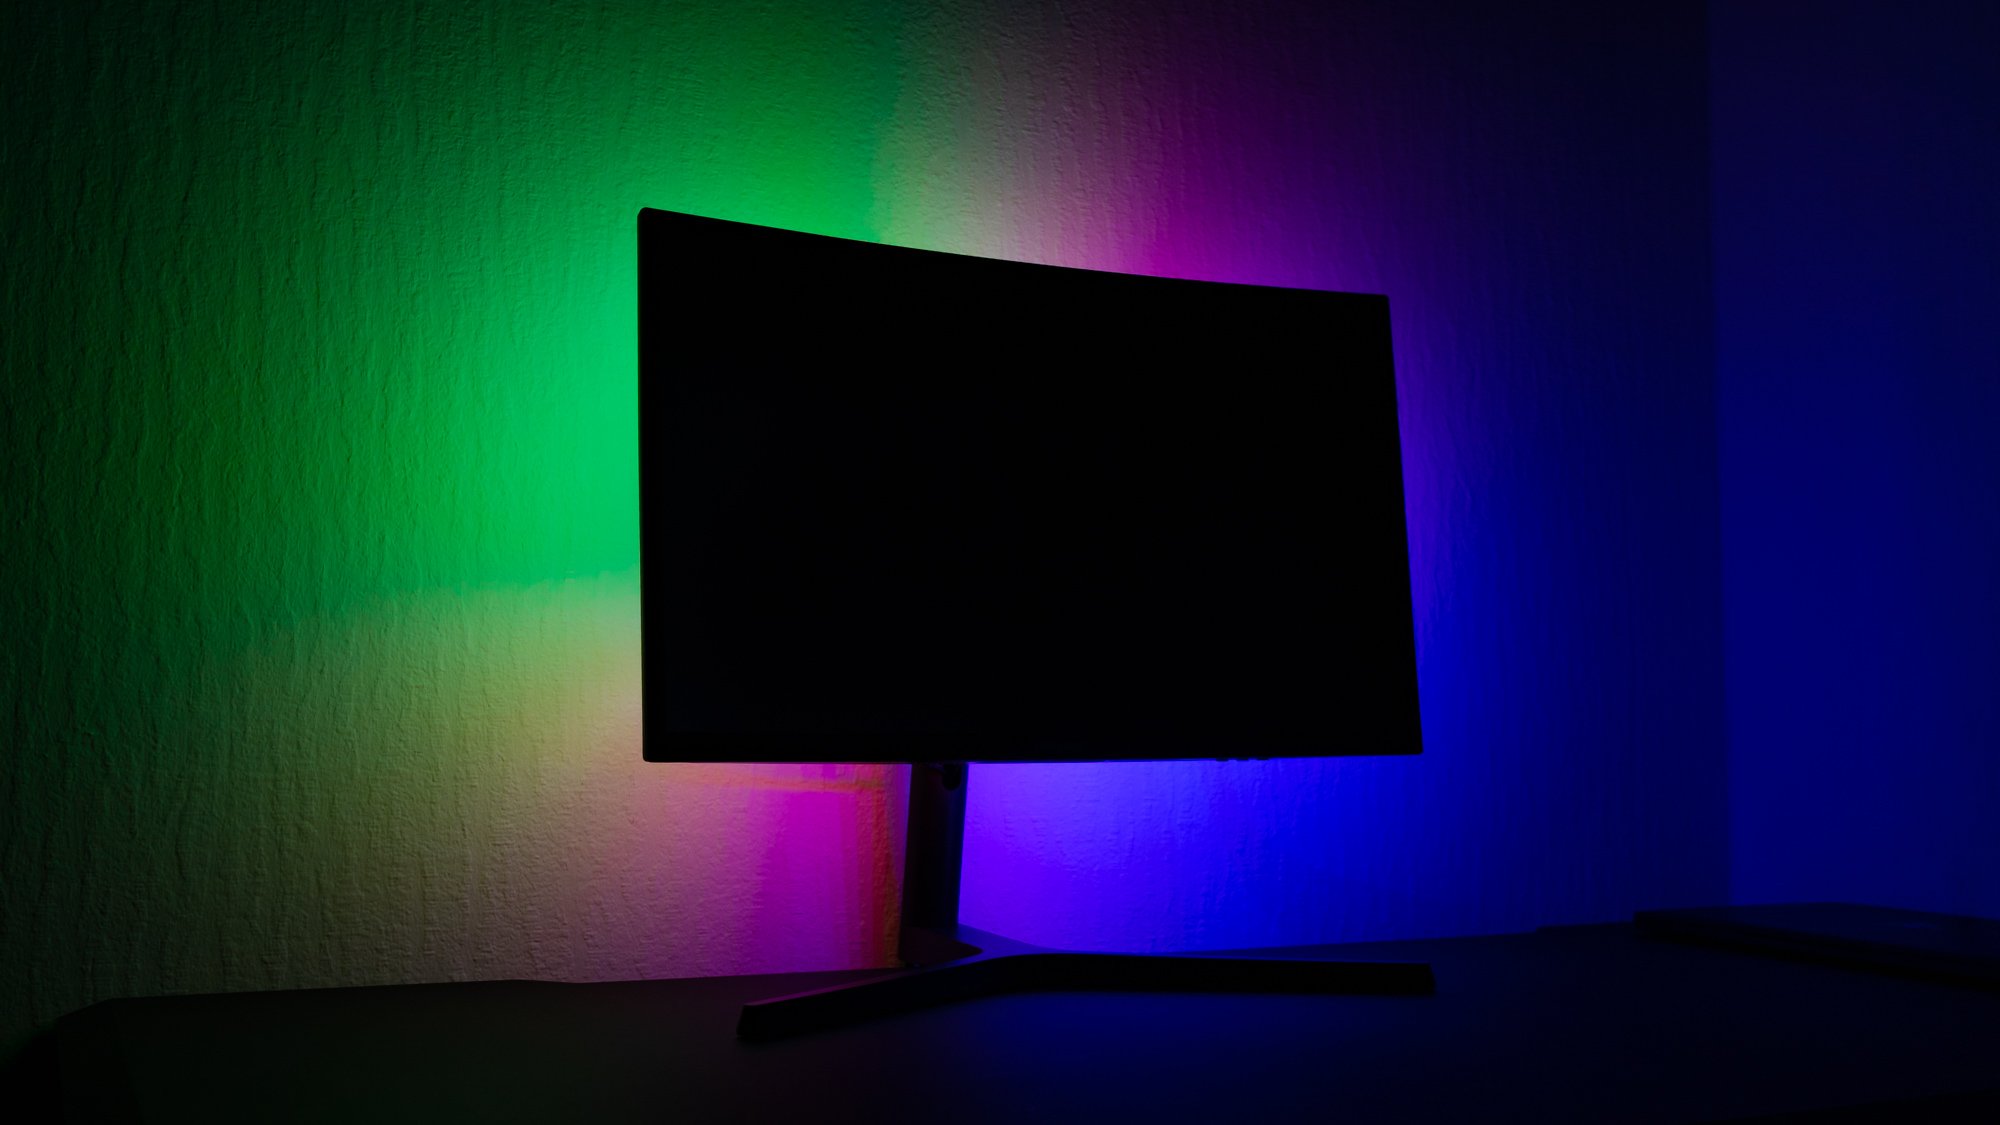 NZXT-Hue2-RGB-LED-Monitor-Lighting-5